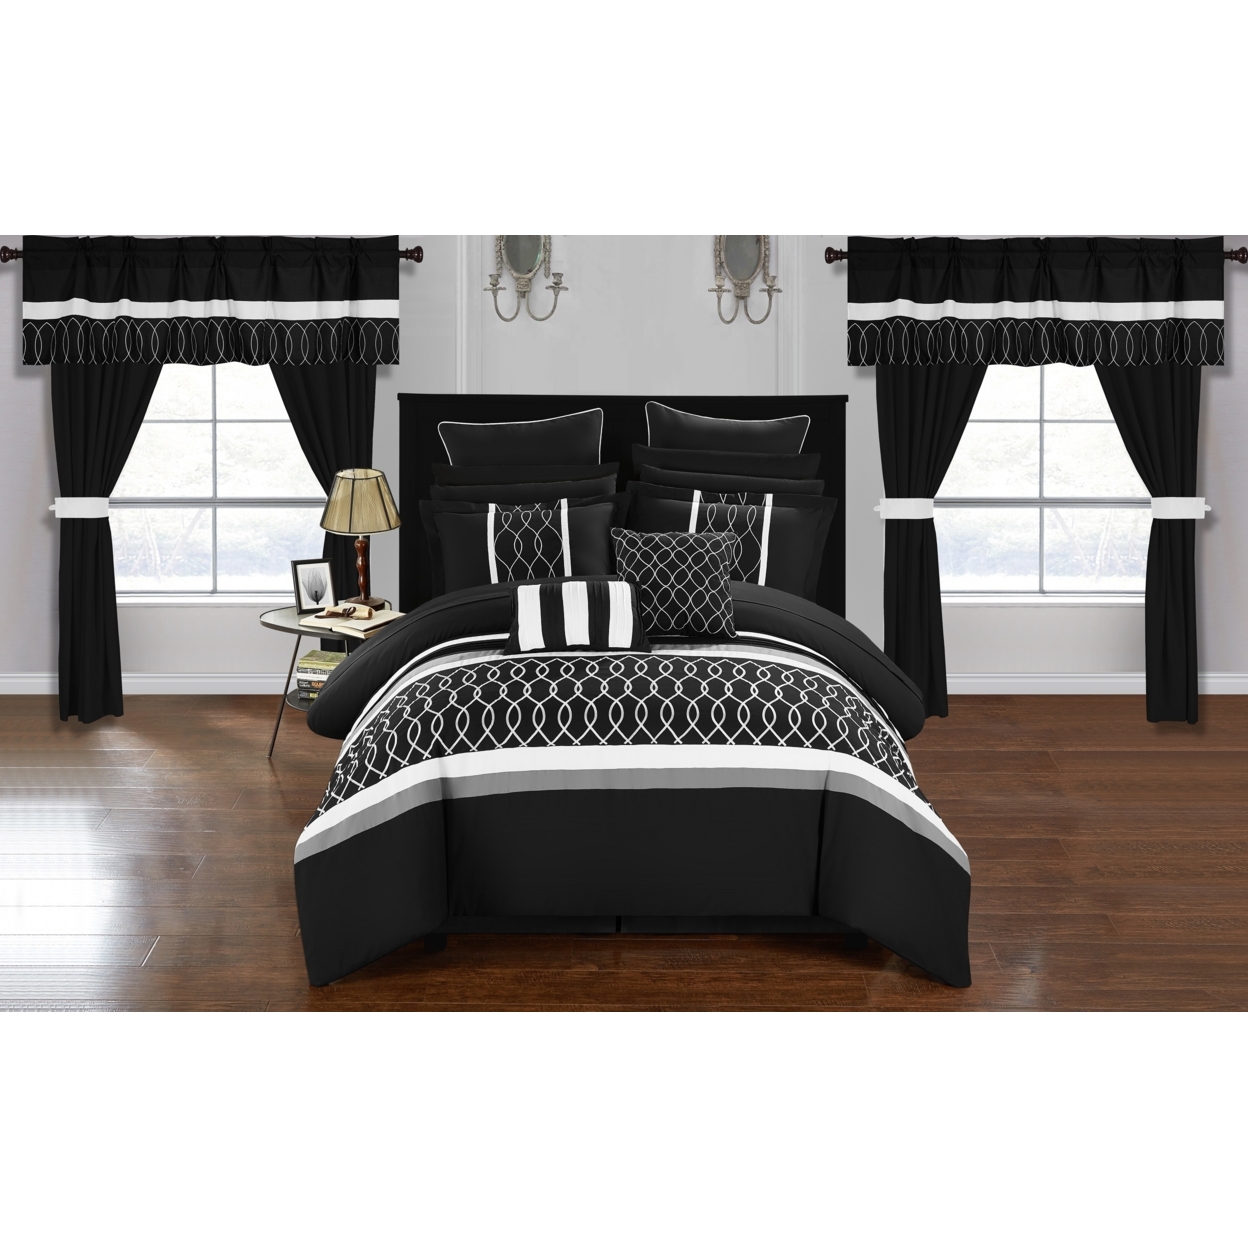 Topaz 24 Piece Comforter Bed In A Bag Pleated Ruffled Designer Embellished Bedding Set - Black, Queen